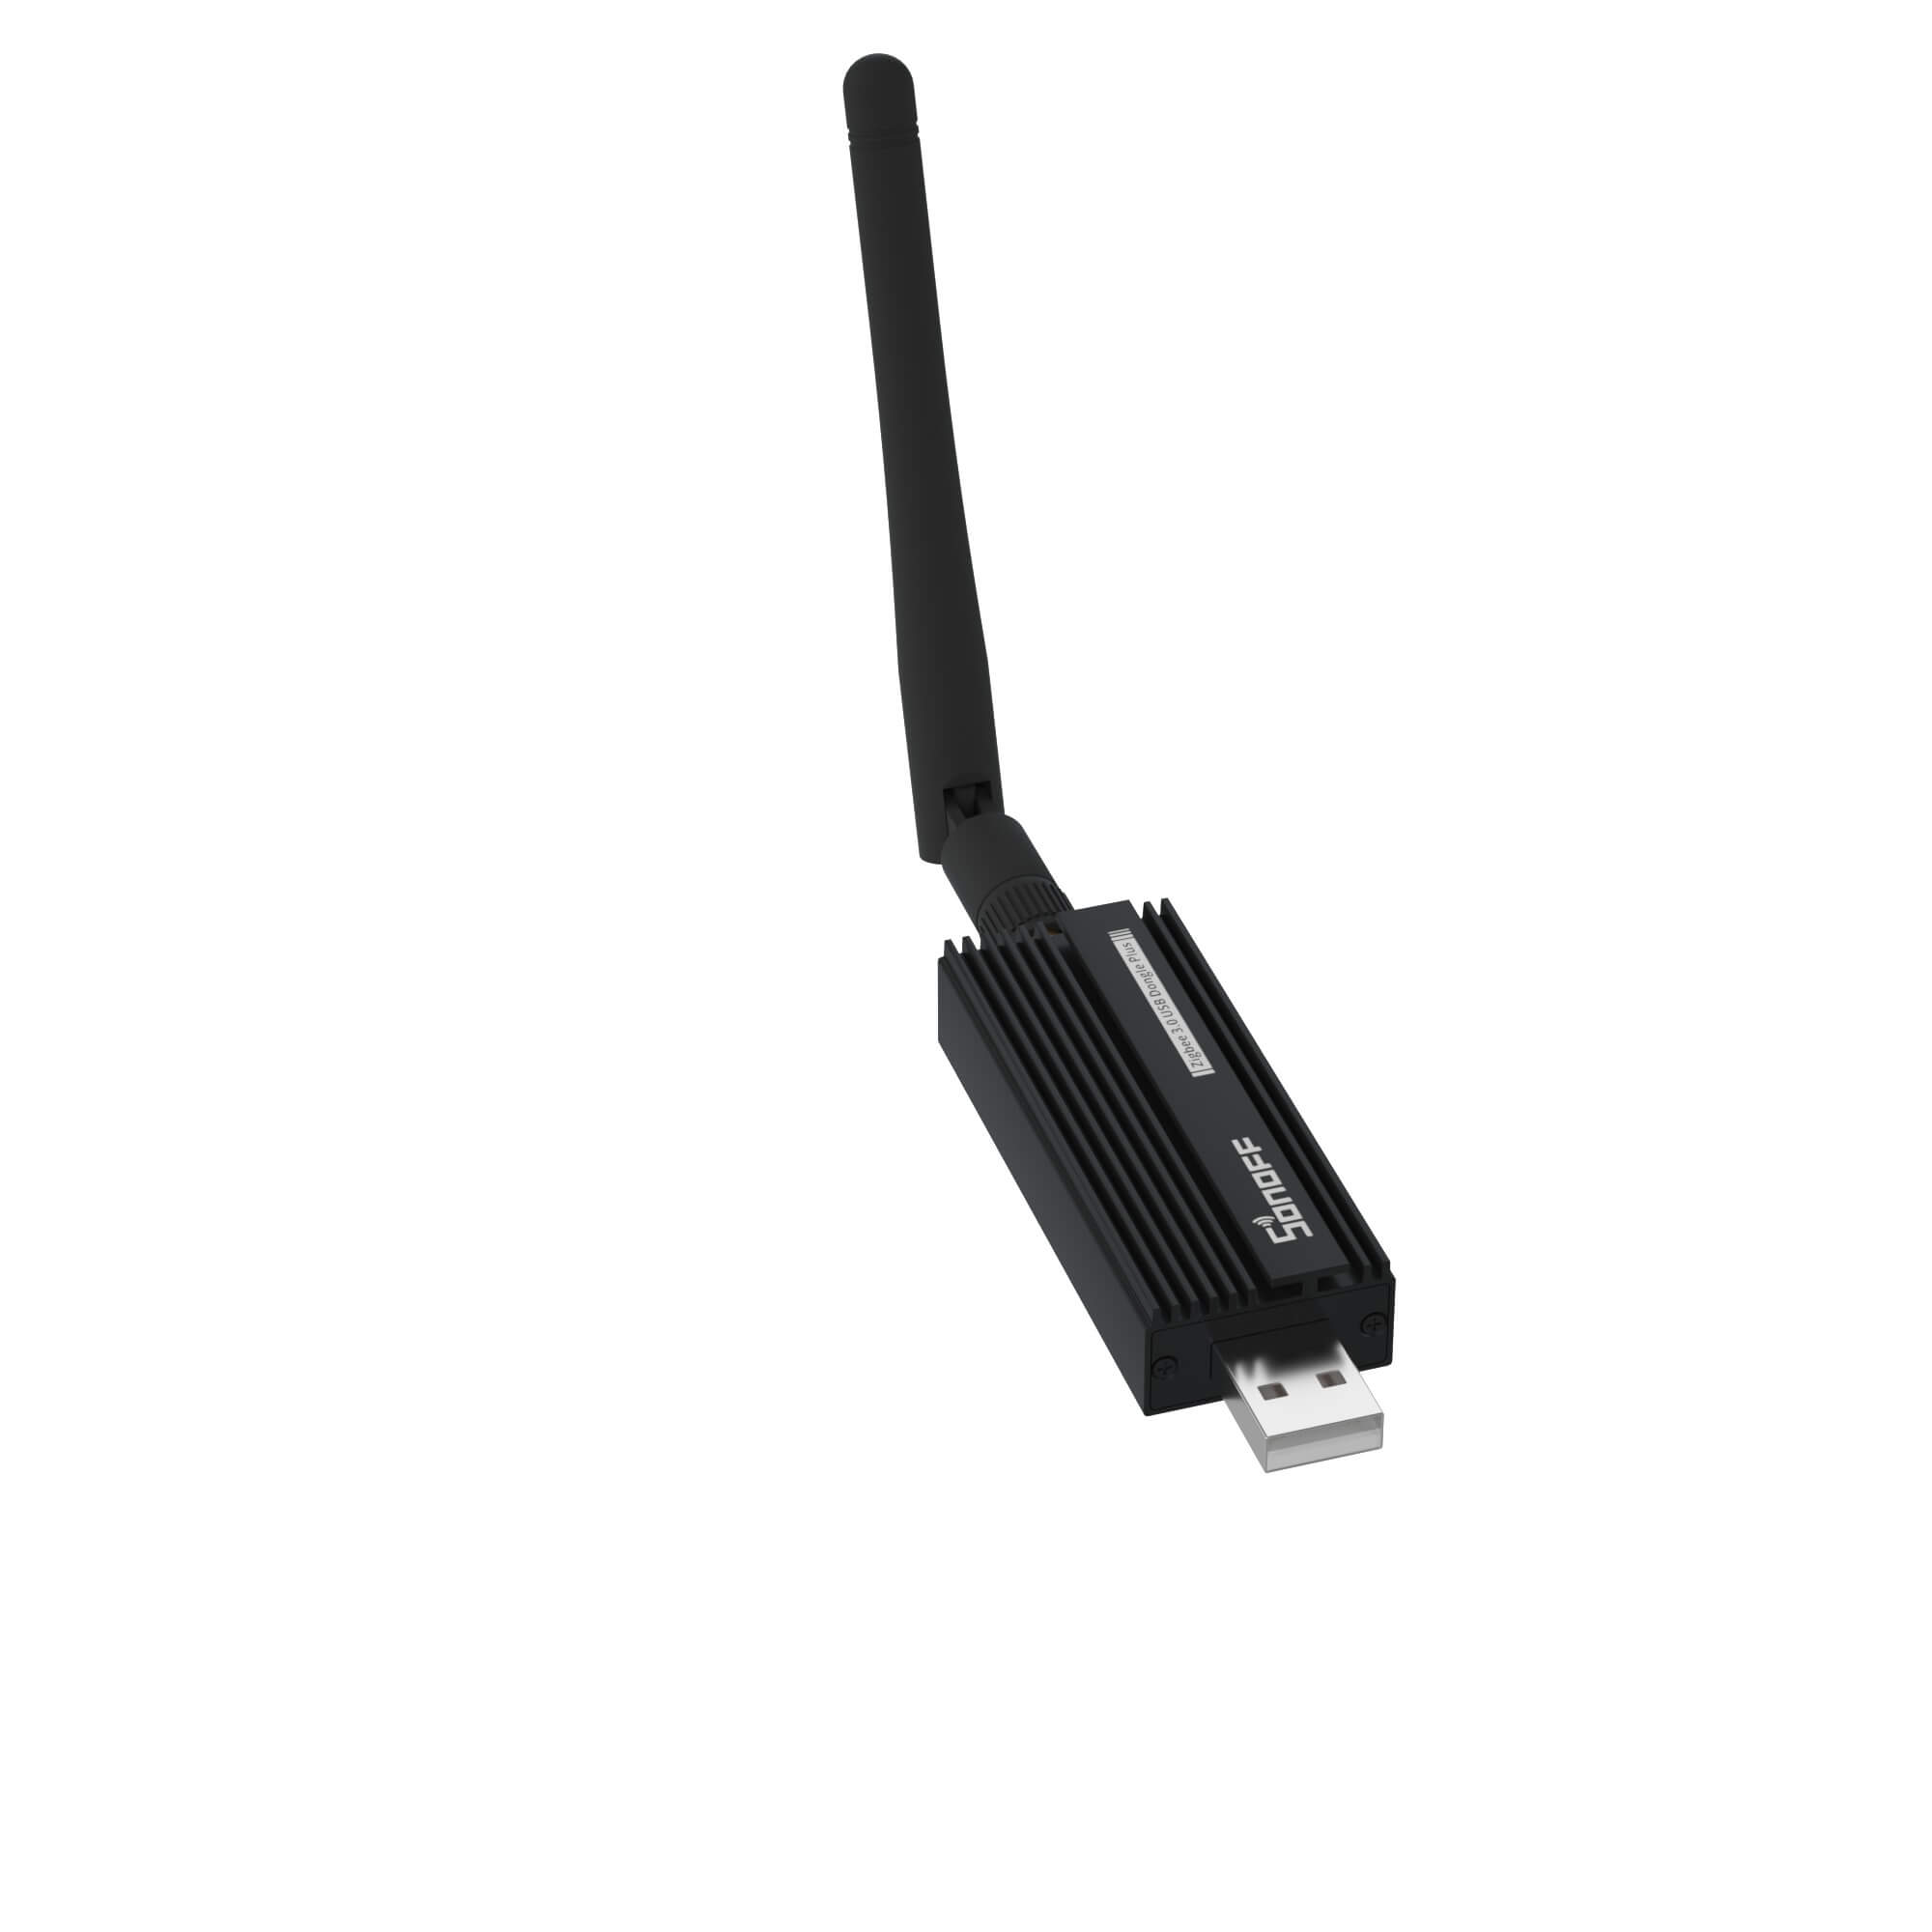 SONOFF Zigbee 3.0 USB Dongle Plus Gateway, Universal Zigbee USB Gateway  with Antenna for Home Assistant, Open HAB etc, Wireless Zigbee 3.0 USB  Adapter 